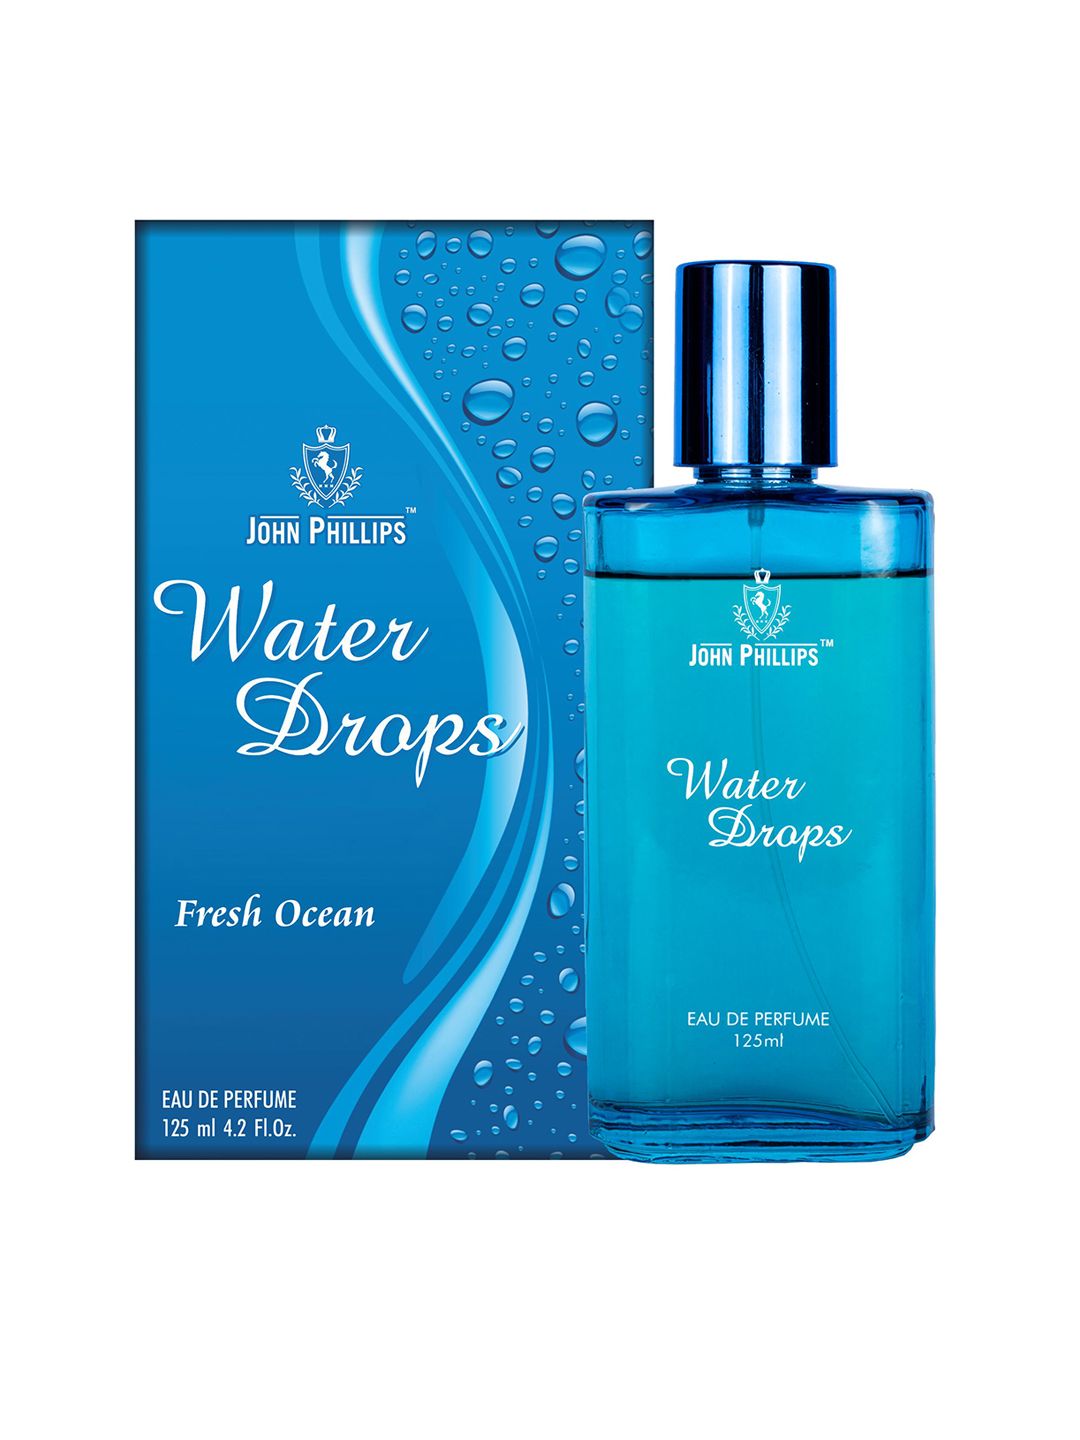 JOHN PHILLIPS Water Drops Fresh Ocean Eau De Perfume - 125ml Price in India